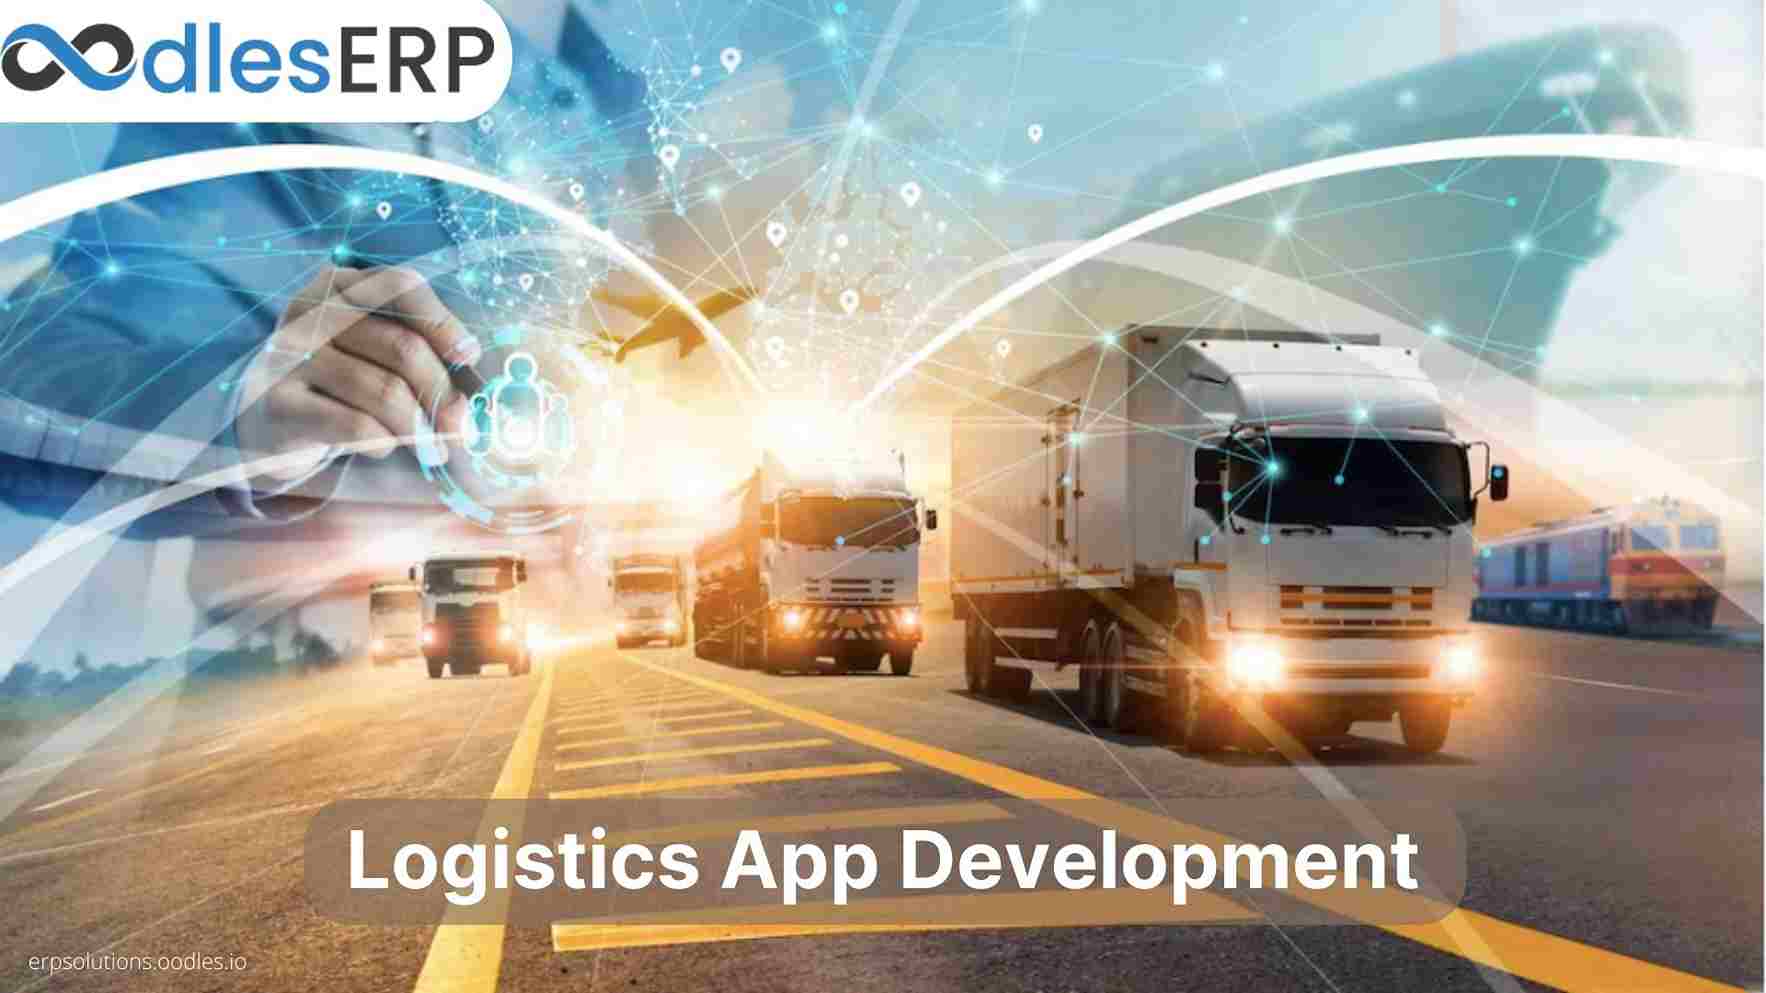 The Key Factors To Consider For Logistics App Development